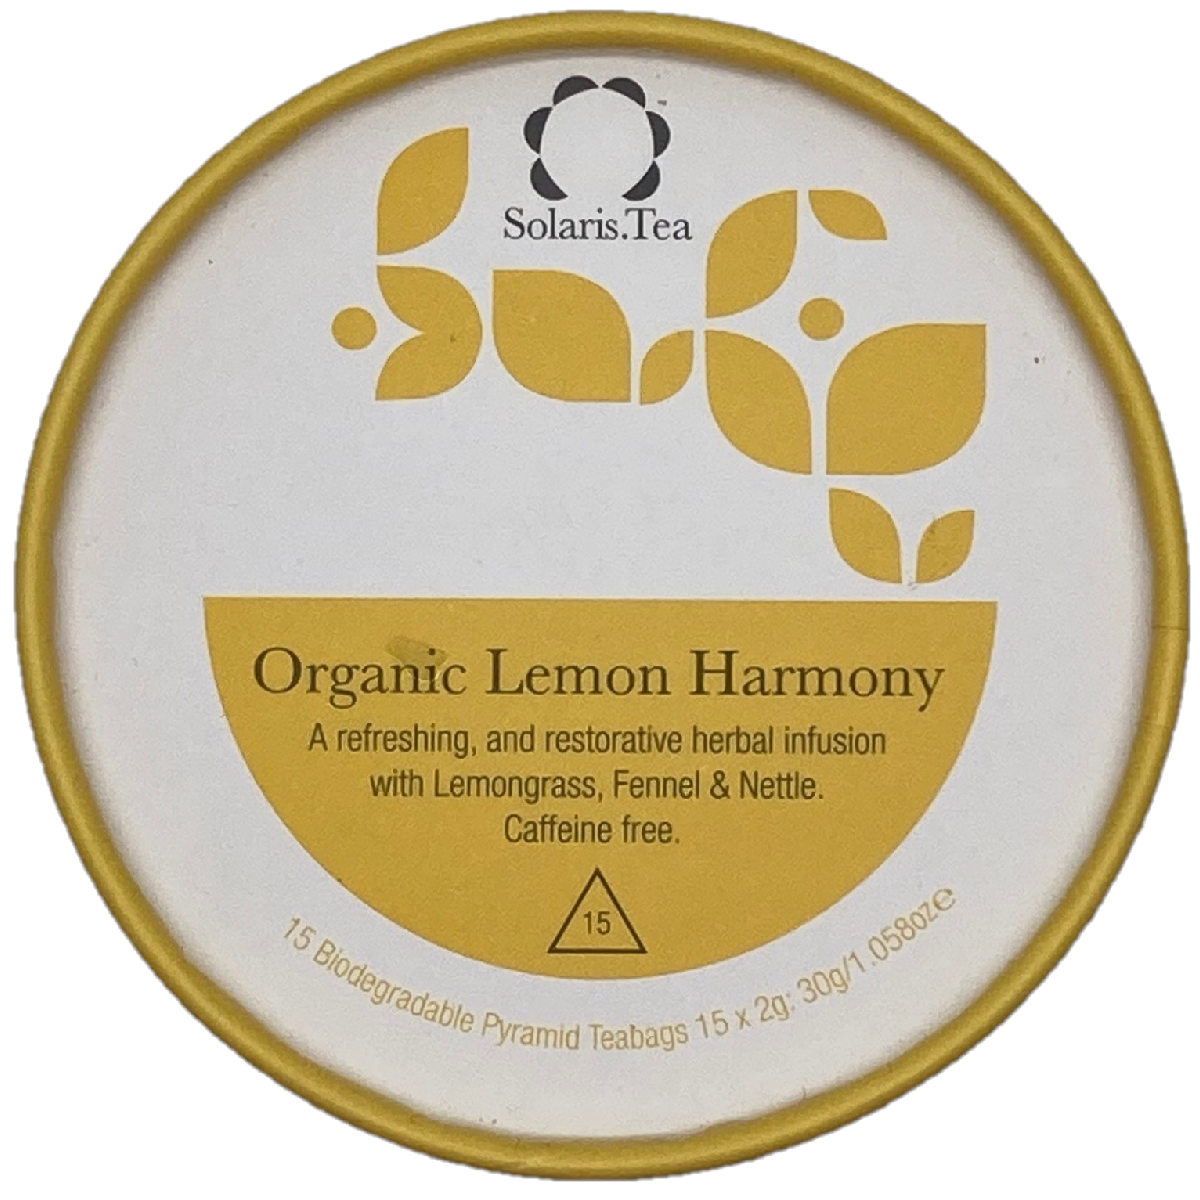 Solaris Tea Organic Lemon Harmony Pyramid Teabags 15x2g